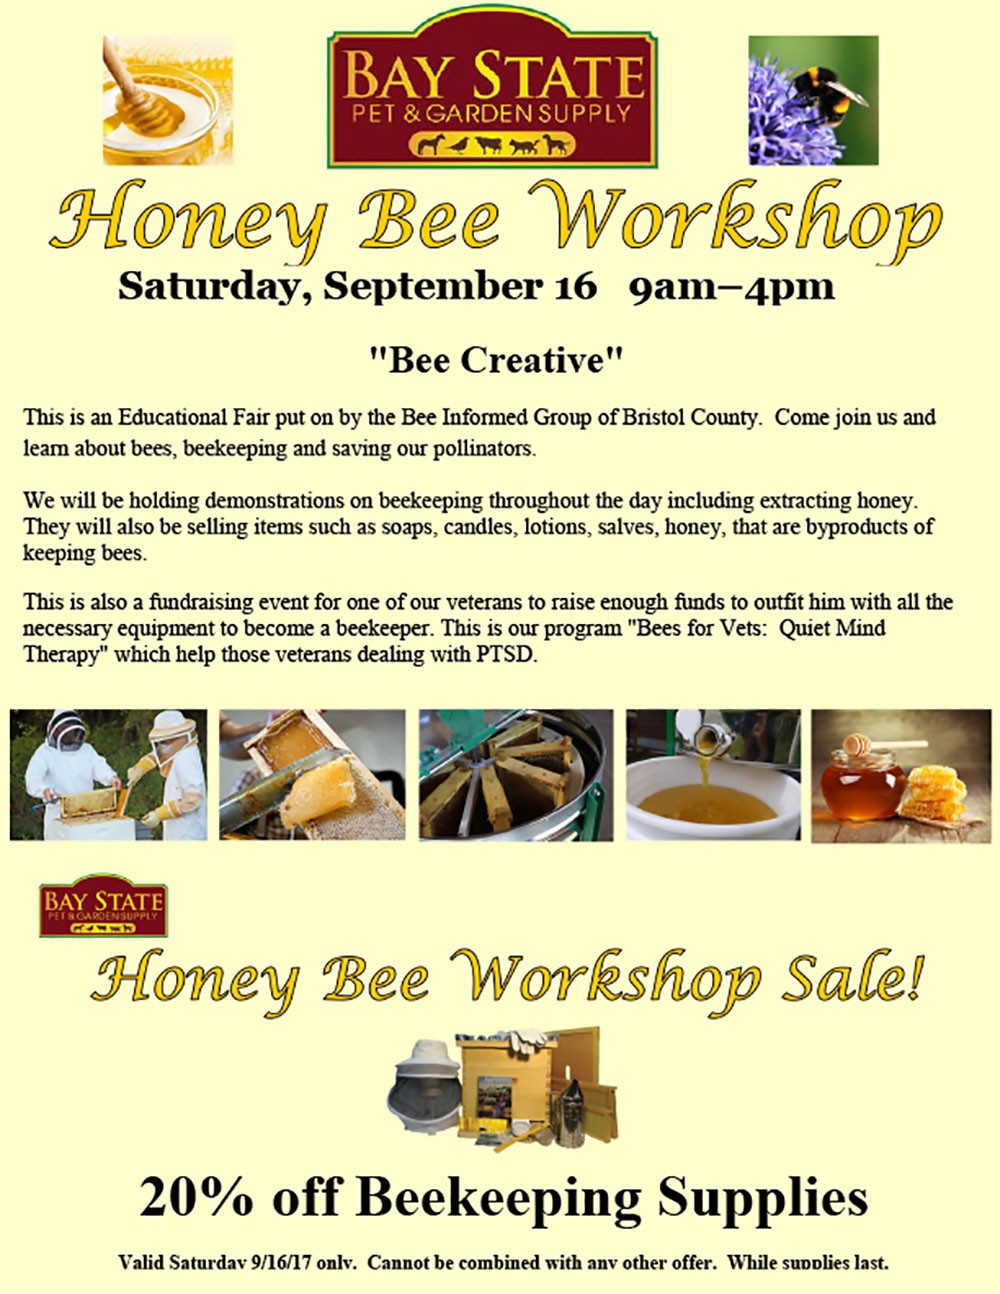 Bay State Honey Bee Workshop